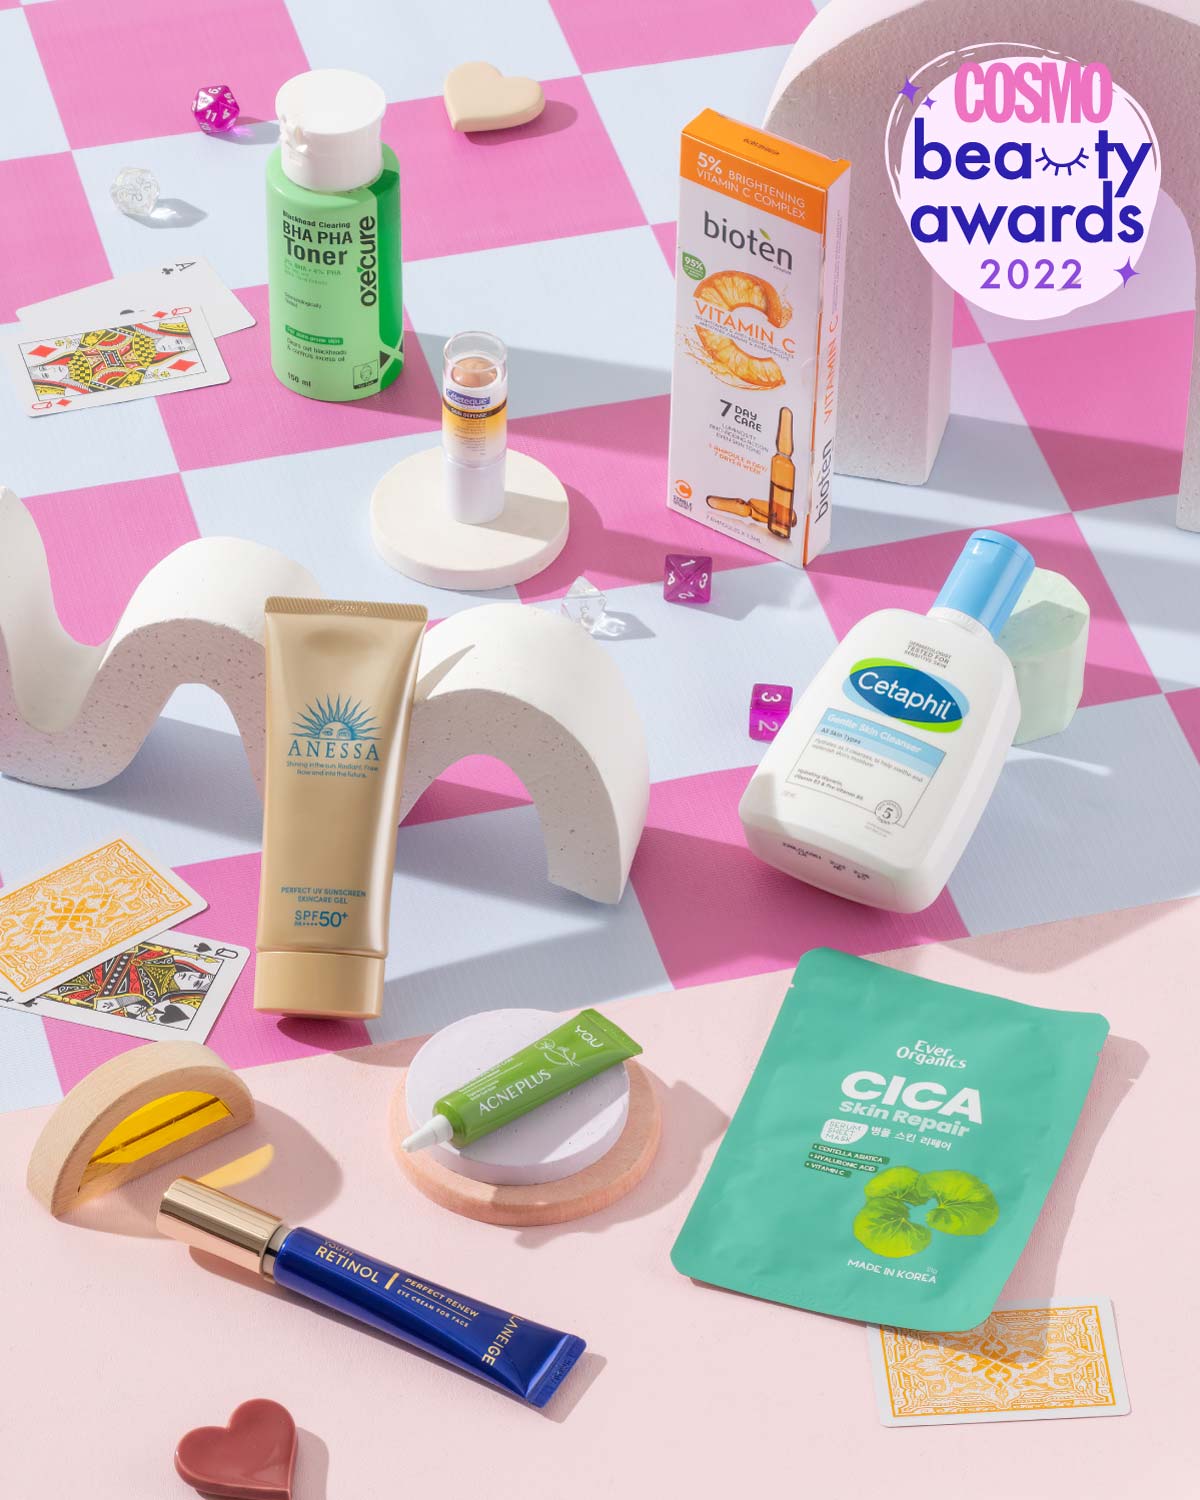 Cosmopolitan Beauty Awards 2022 Winners, skincare